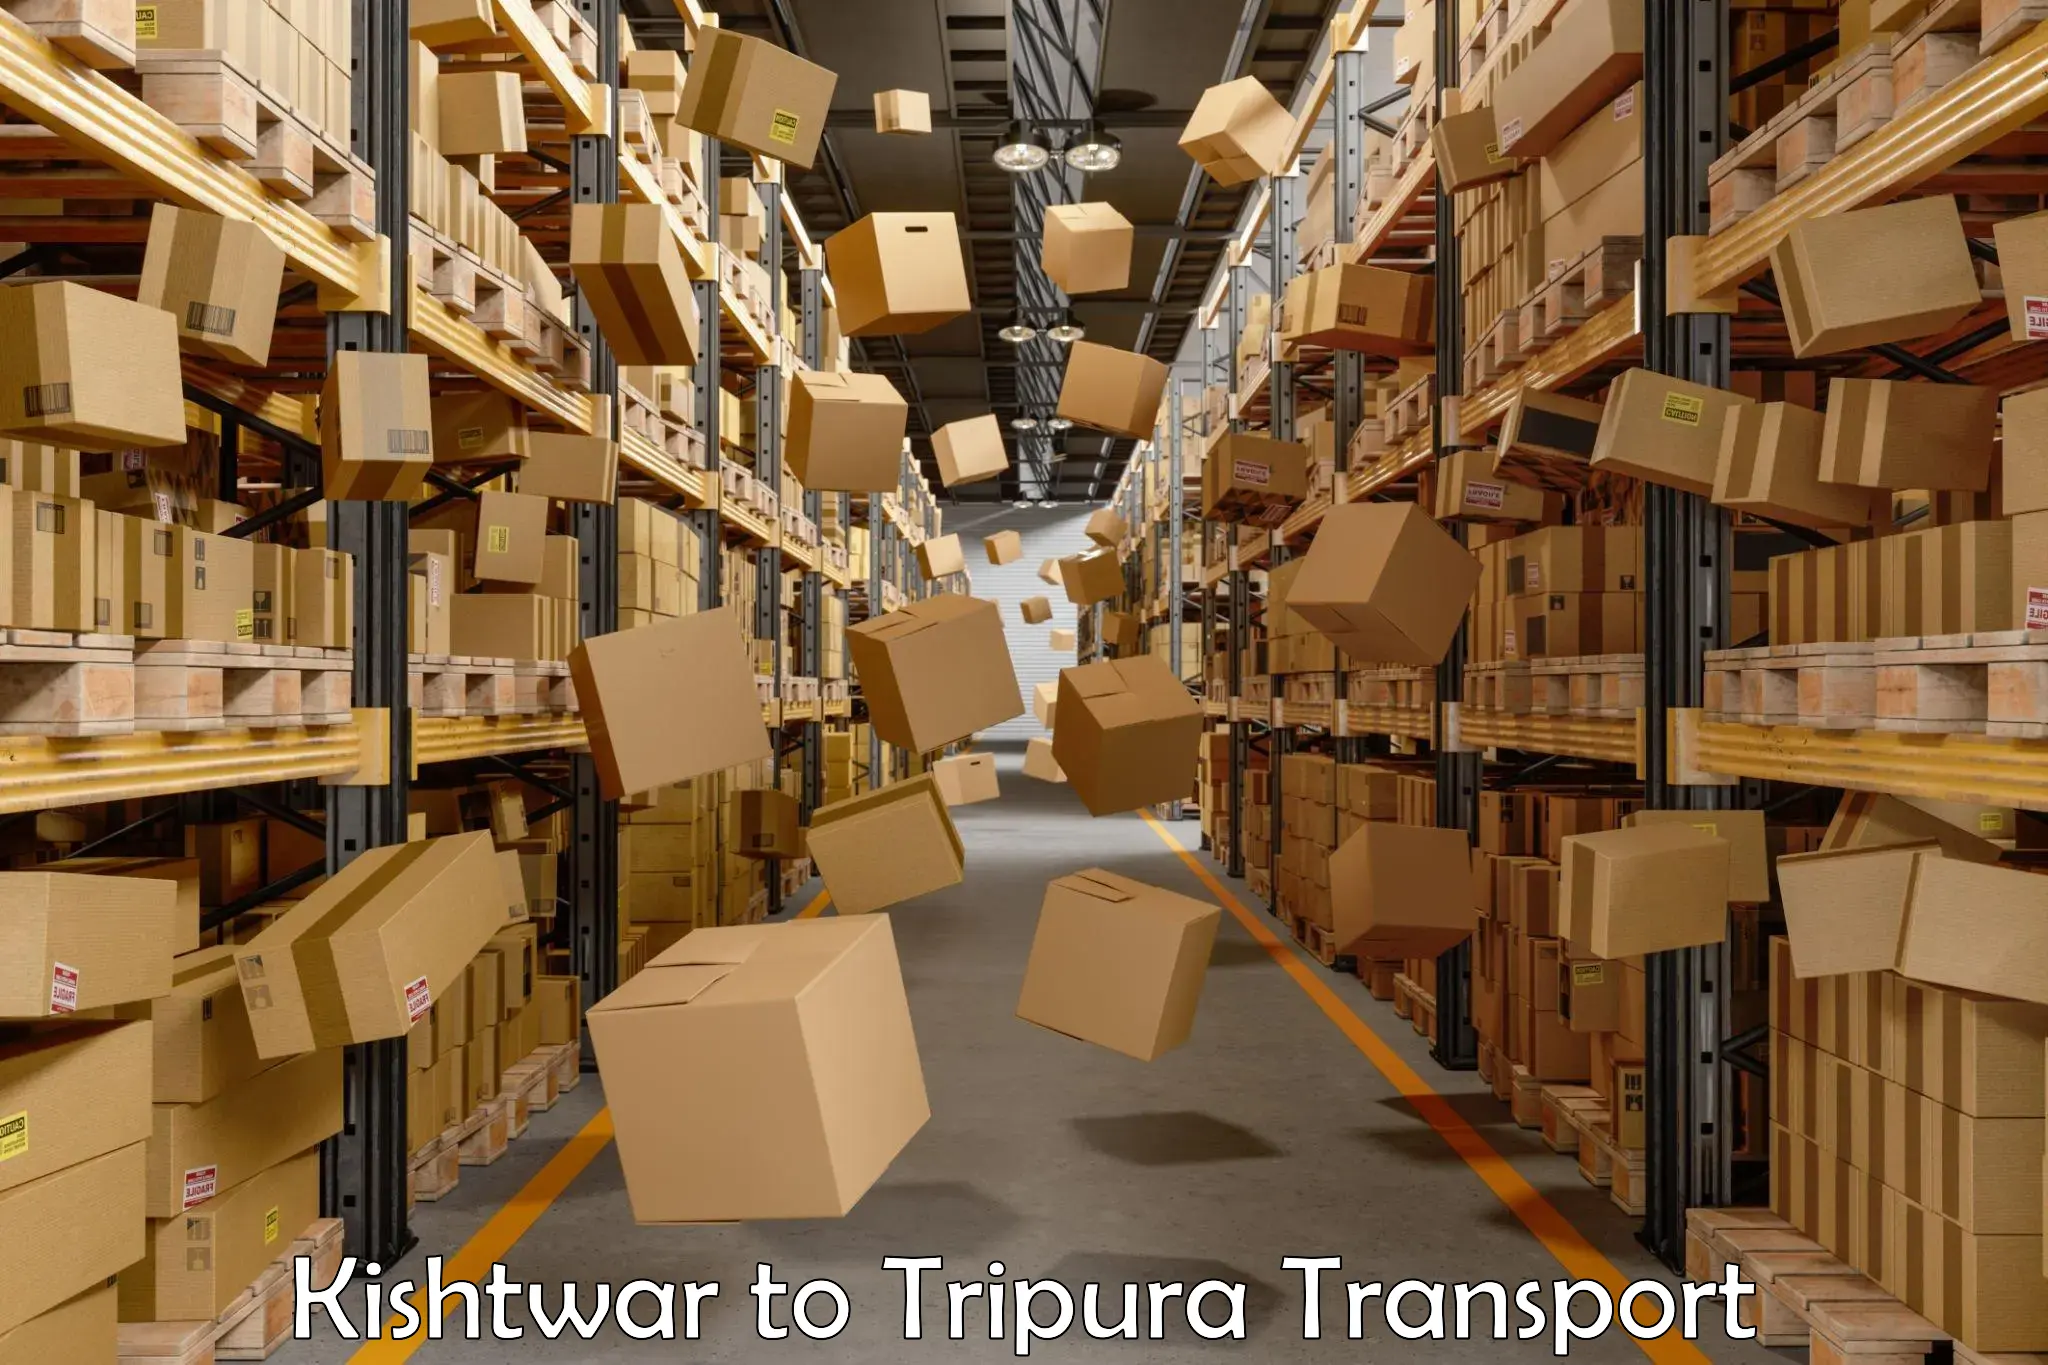 Daily transport service Kishtwar to Udaipur Tripura